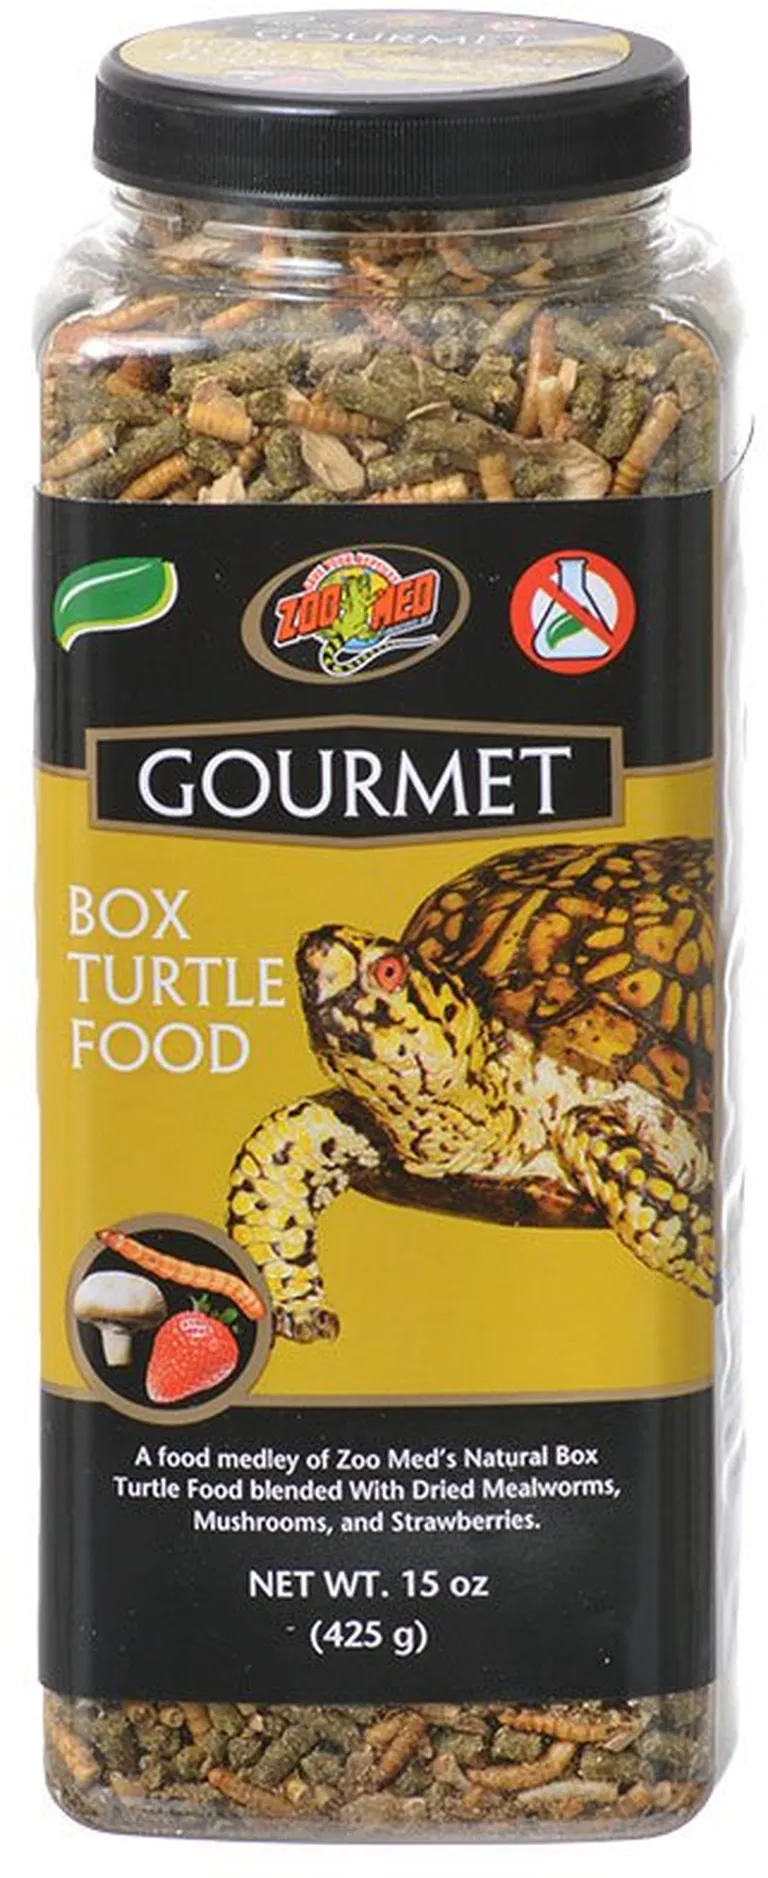 Zoo Med Gourmet Box Turtle Food Photo 1